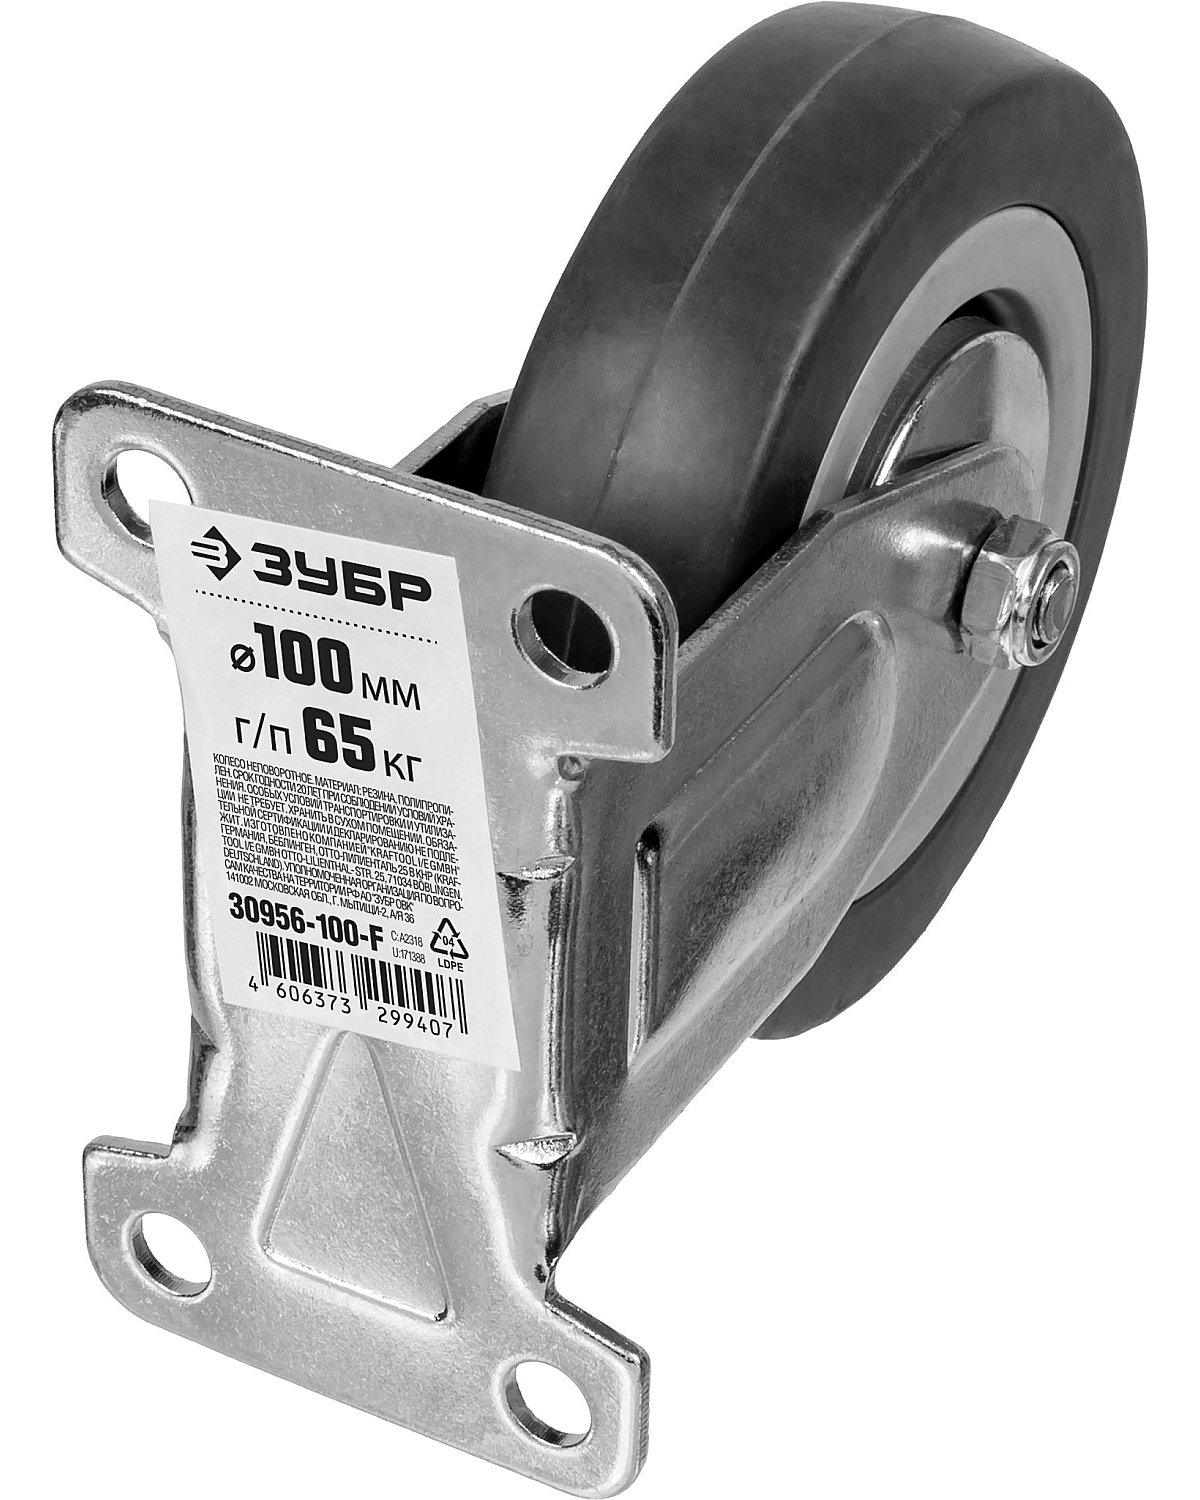 Неповоротное колесо ЗУБР резина полипропилен d 100 мм г п 65 кг (30956-100-F)